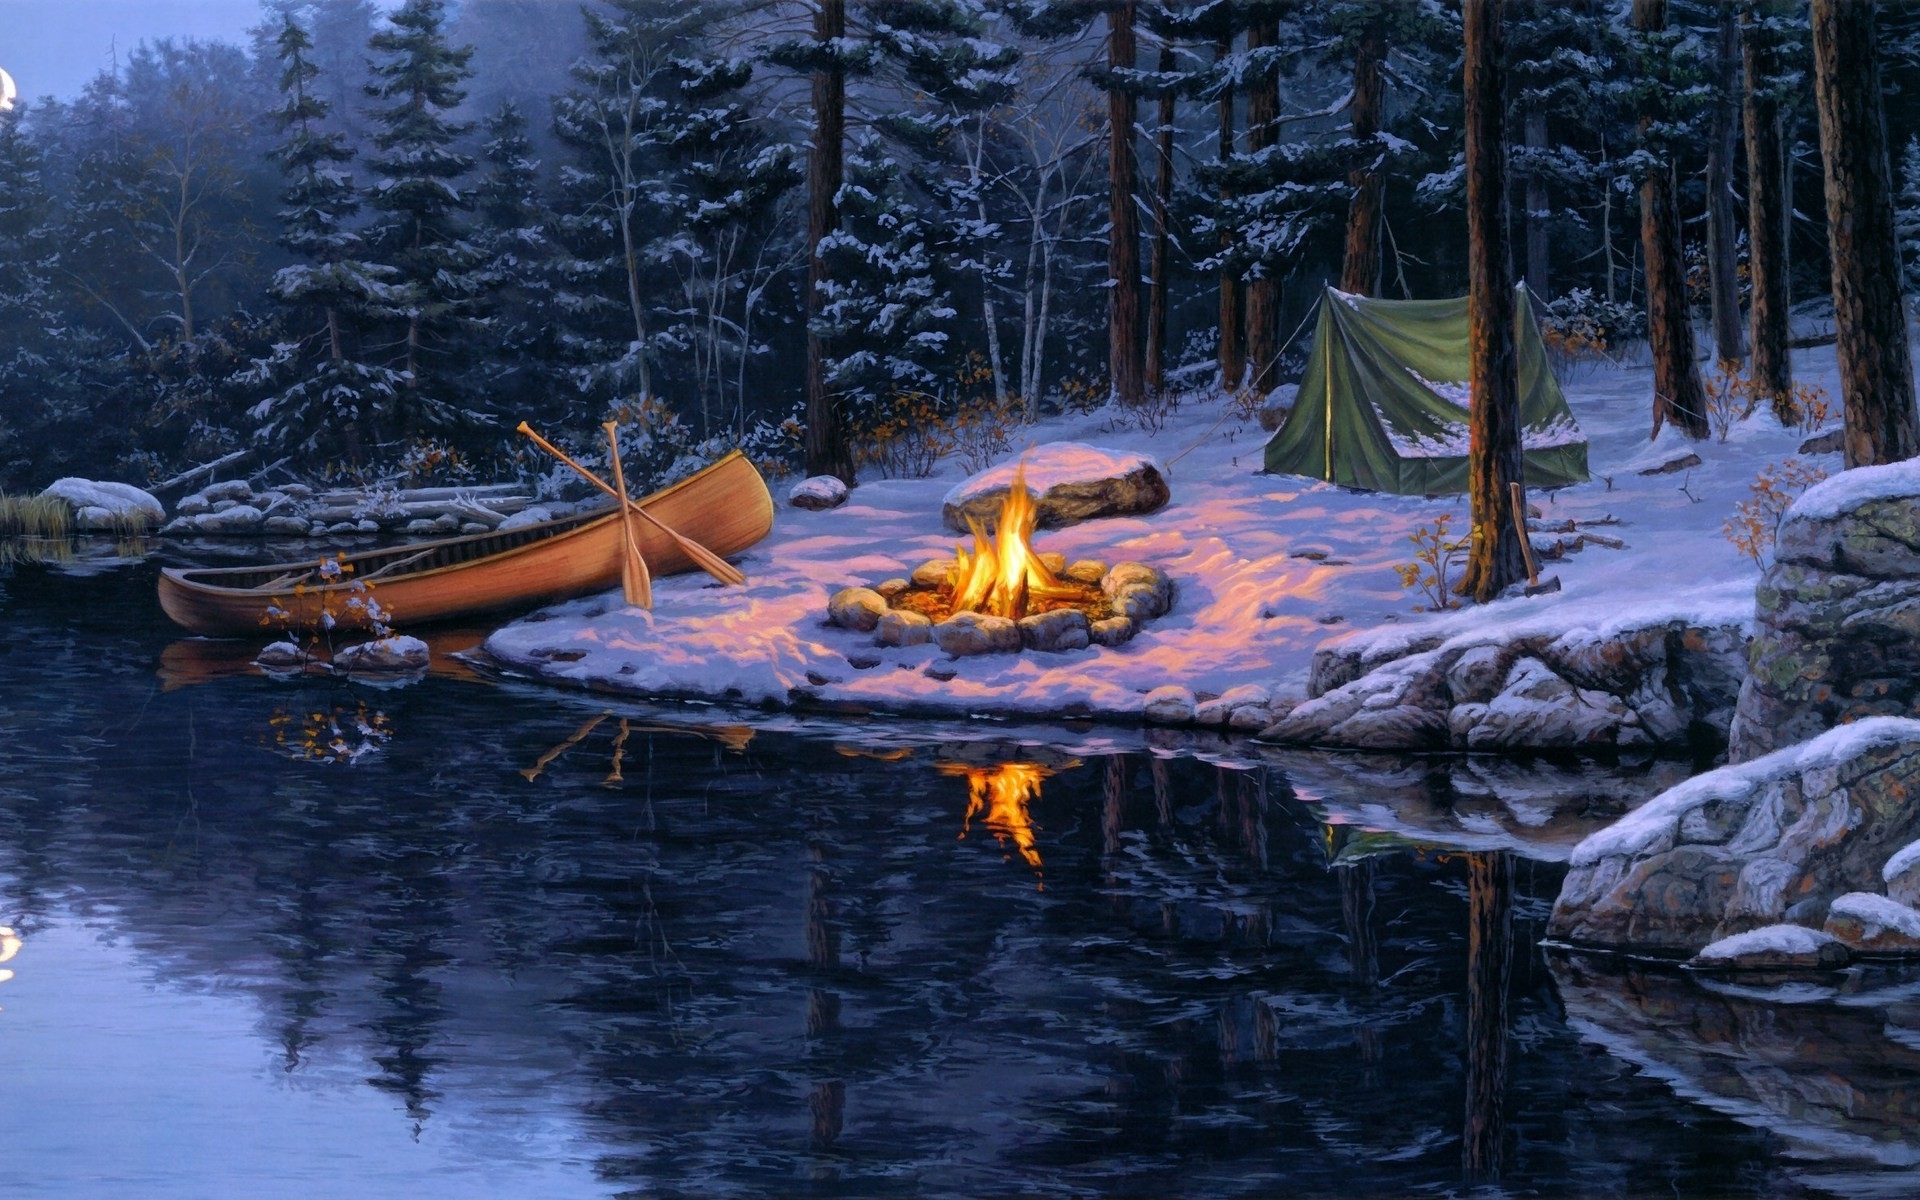 Camping Near A River Wallpaper